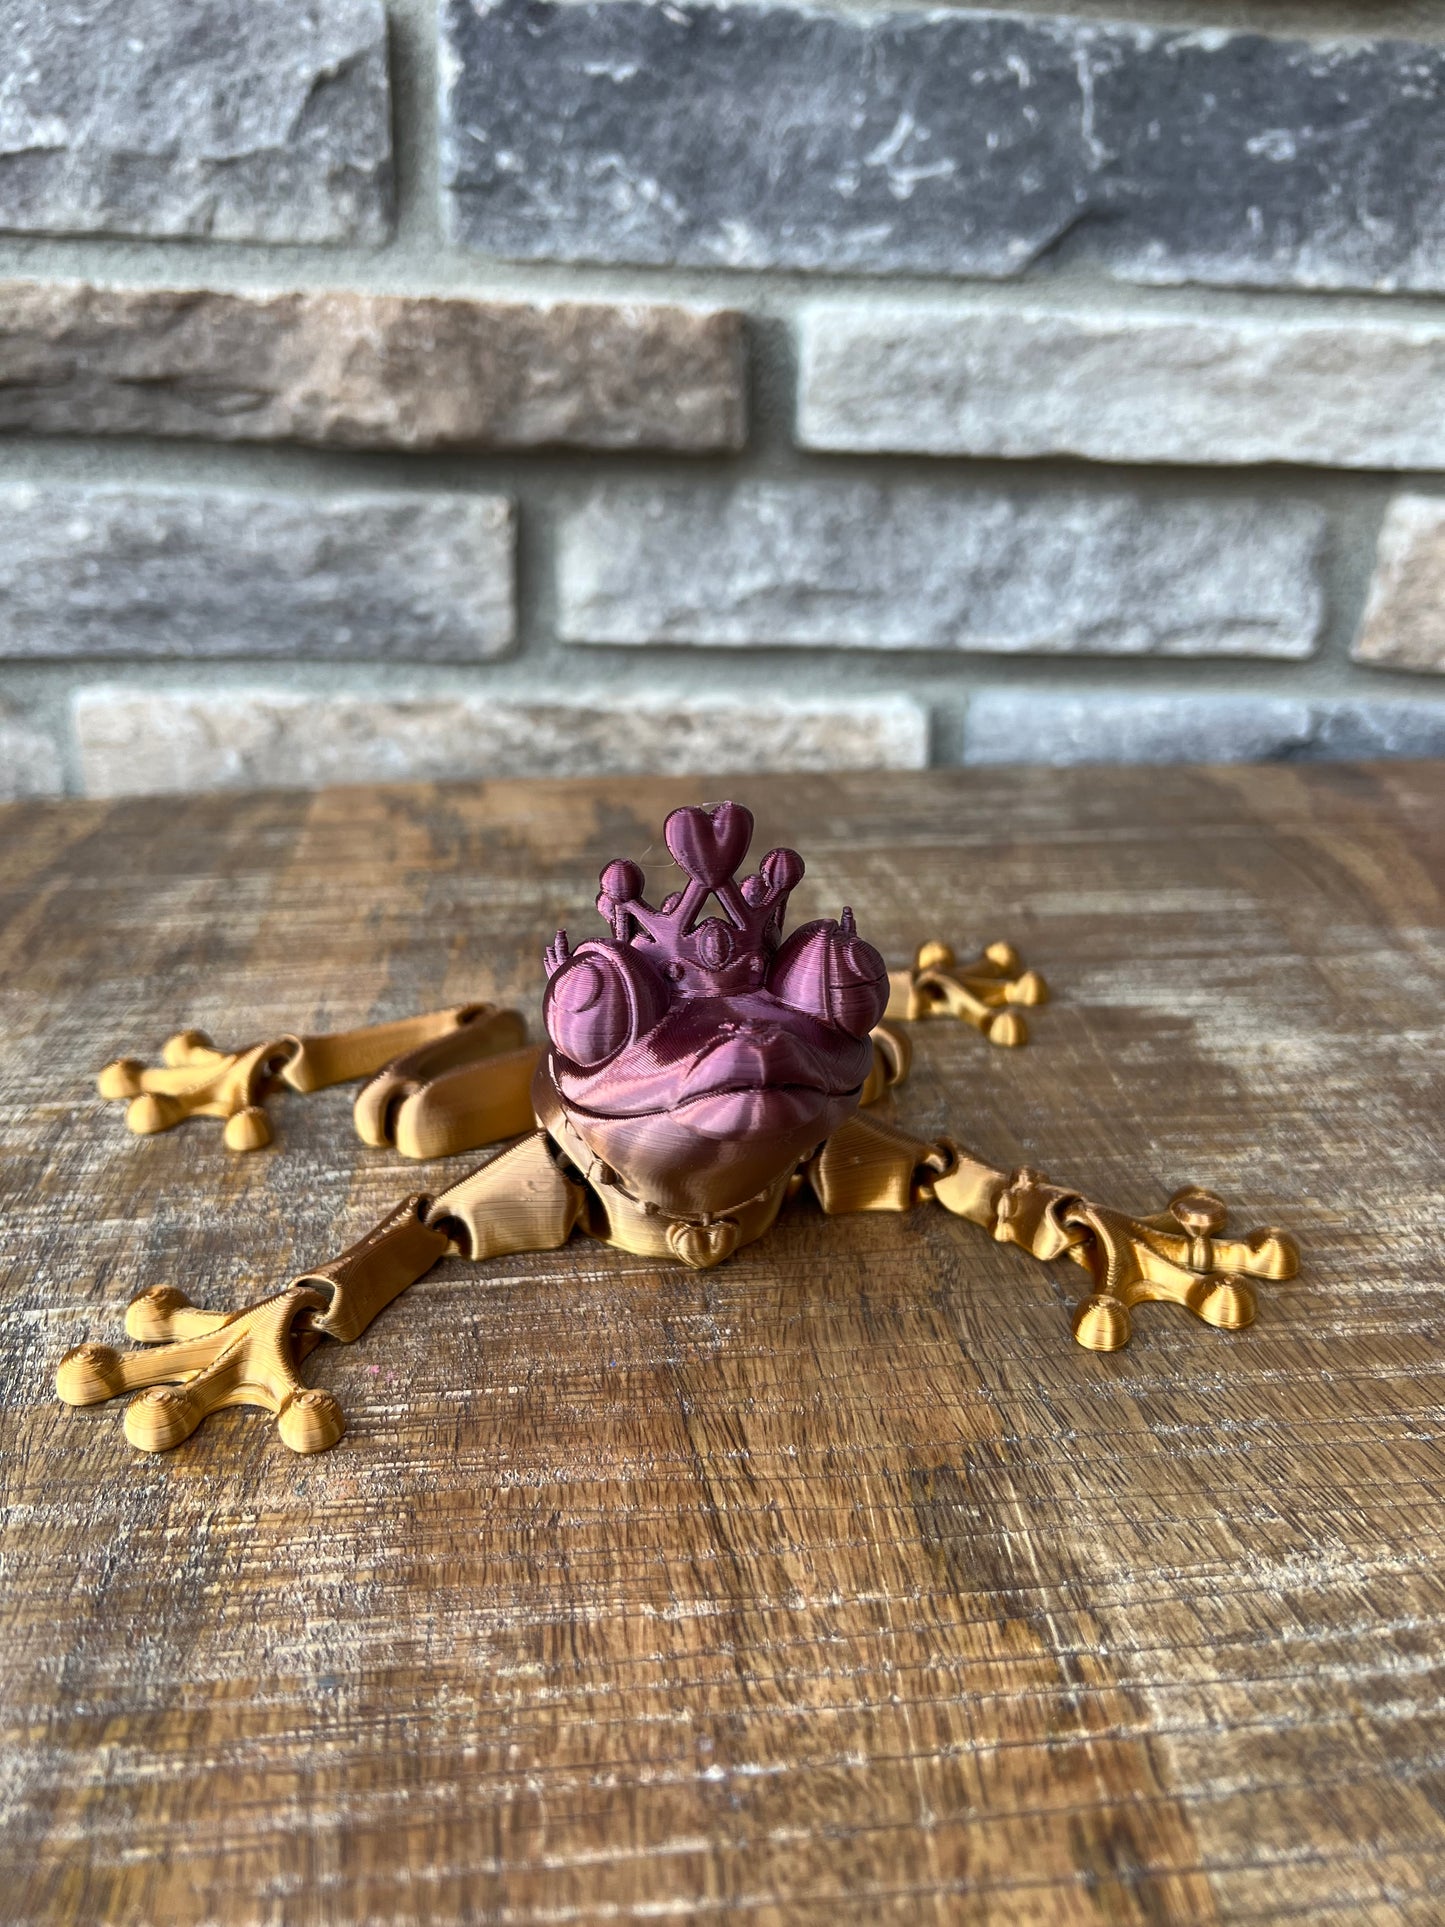 Frog Princess | 3d Printed | Articulated Flexible | Custom Fidget Toy